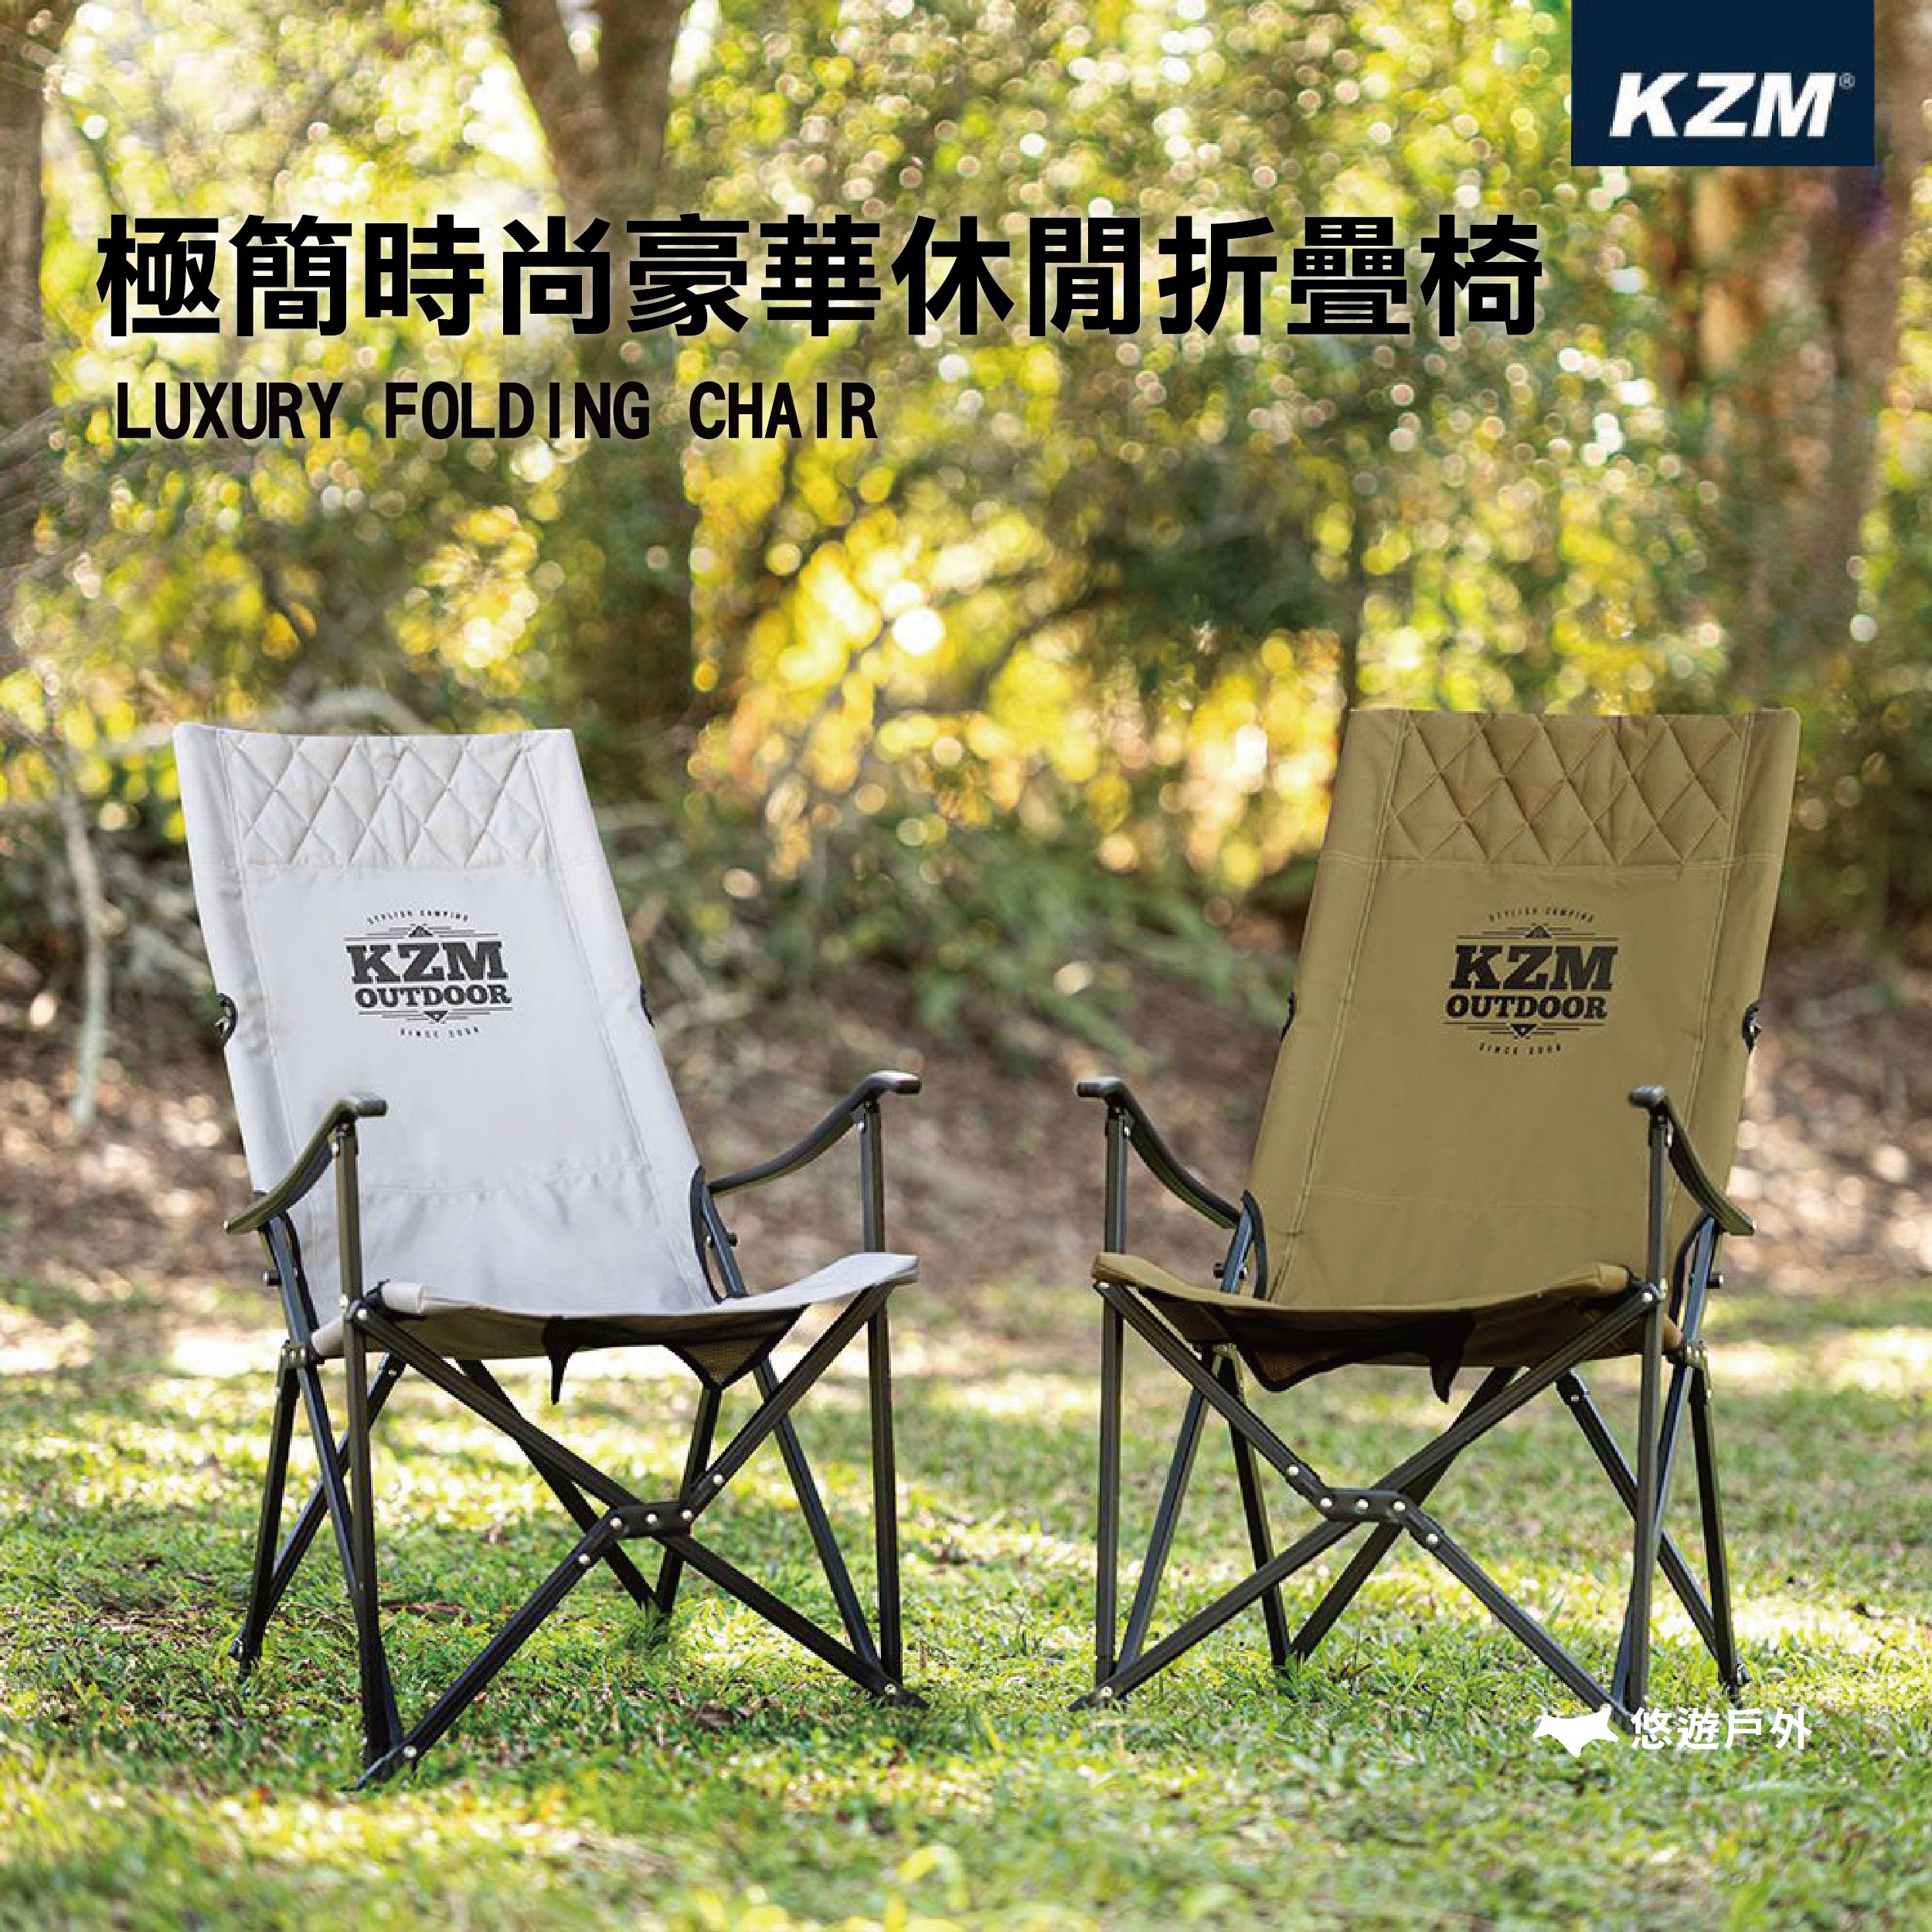 【KAZMI】極簡時尚豪華休閒折疊椅 三色可選 耐重80kg 摺疊椅 露營隨身椅 露營椅 野餐 露營 悠遊戶外